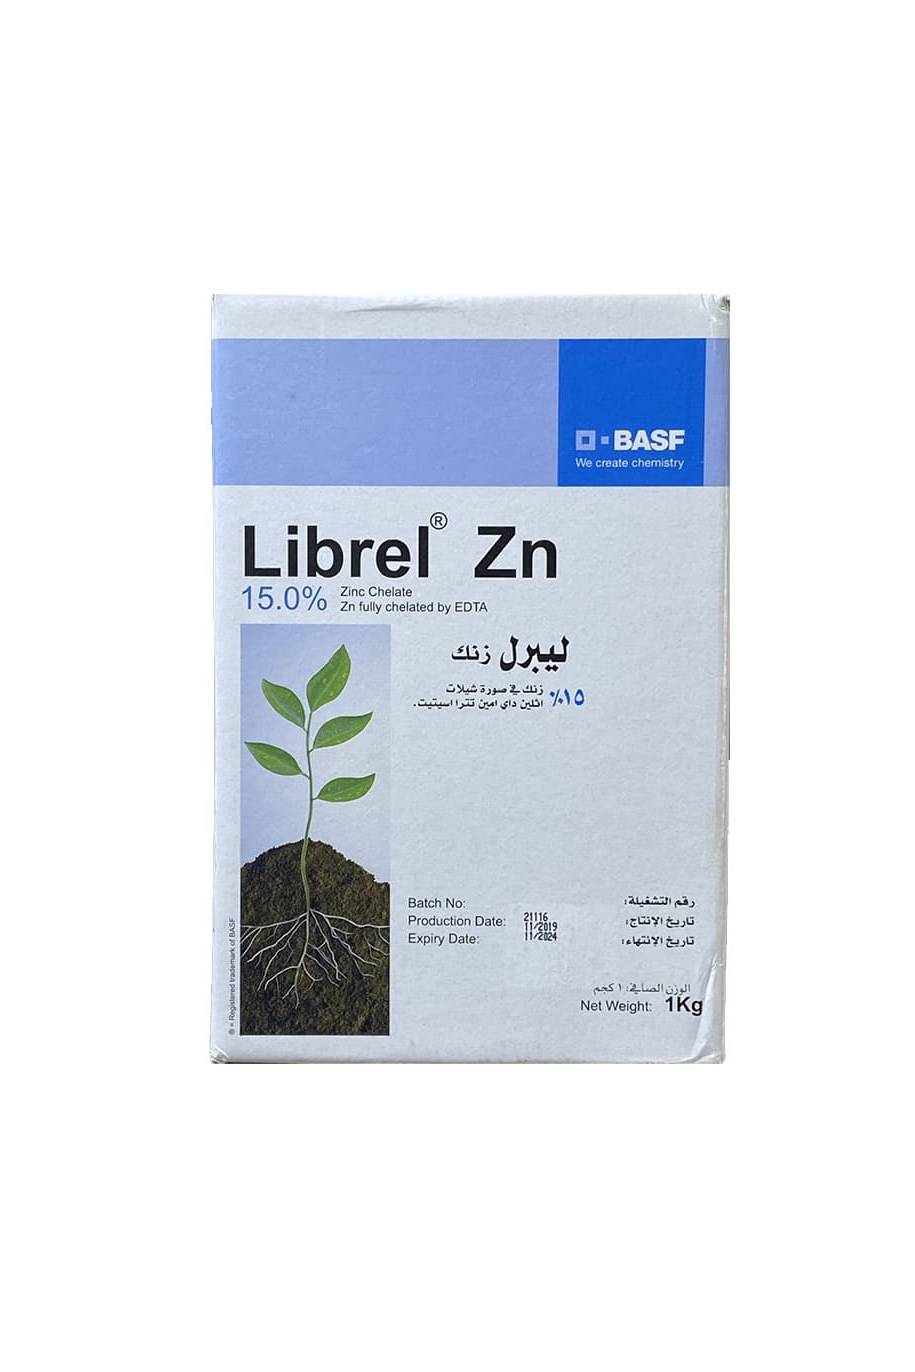 Librel Zn - Zinc Chelate